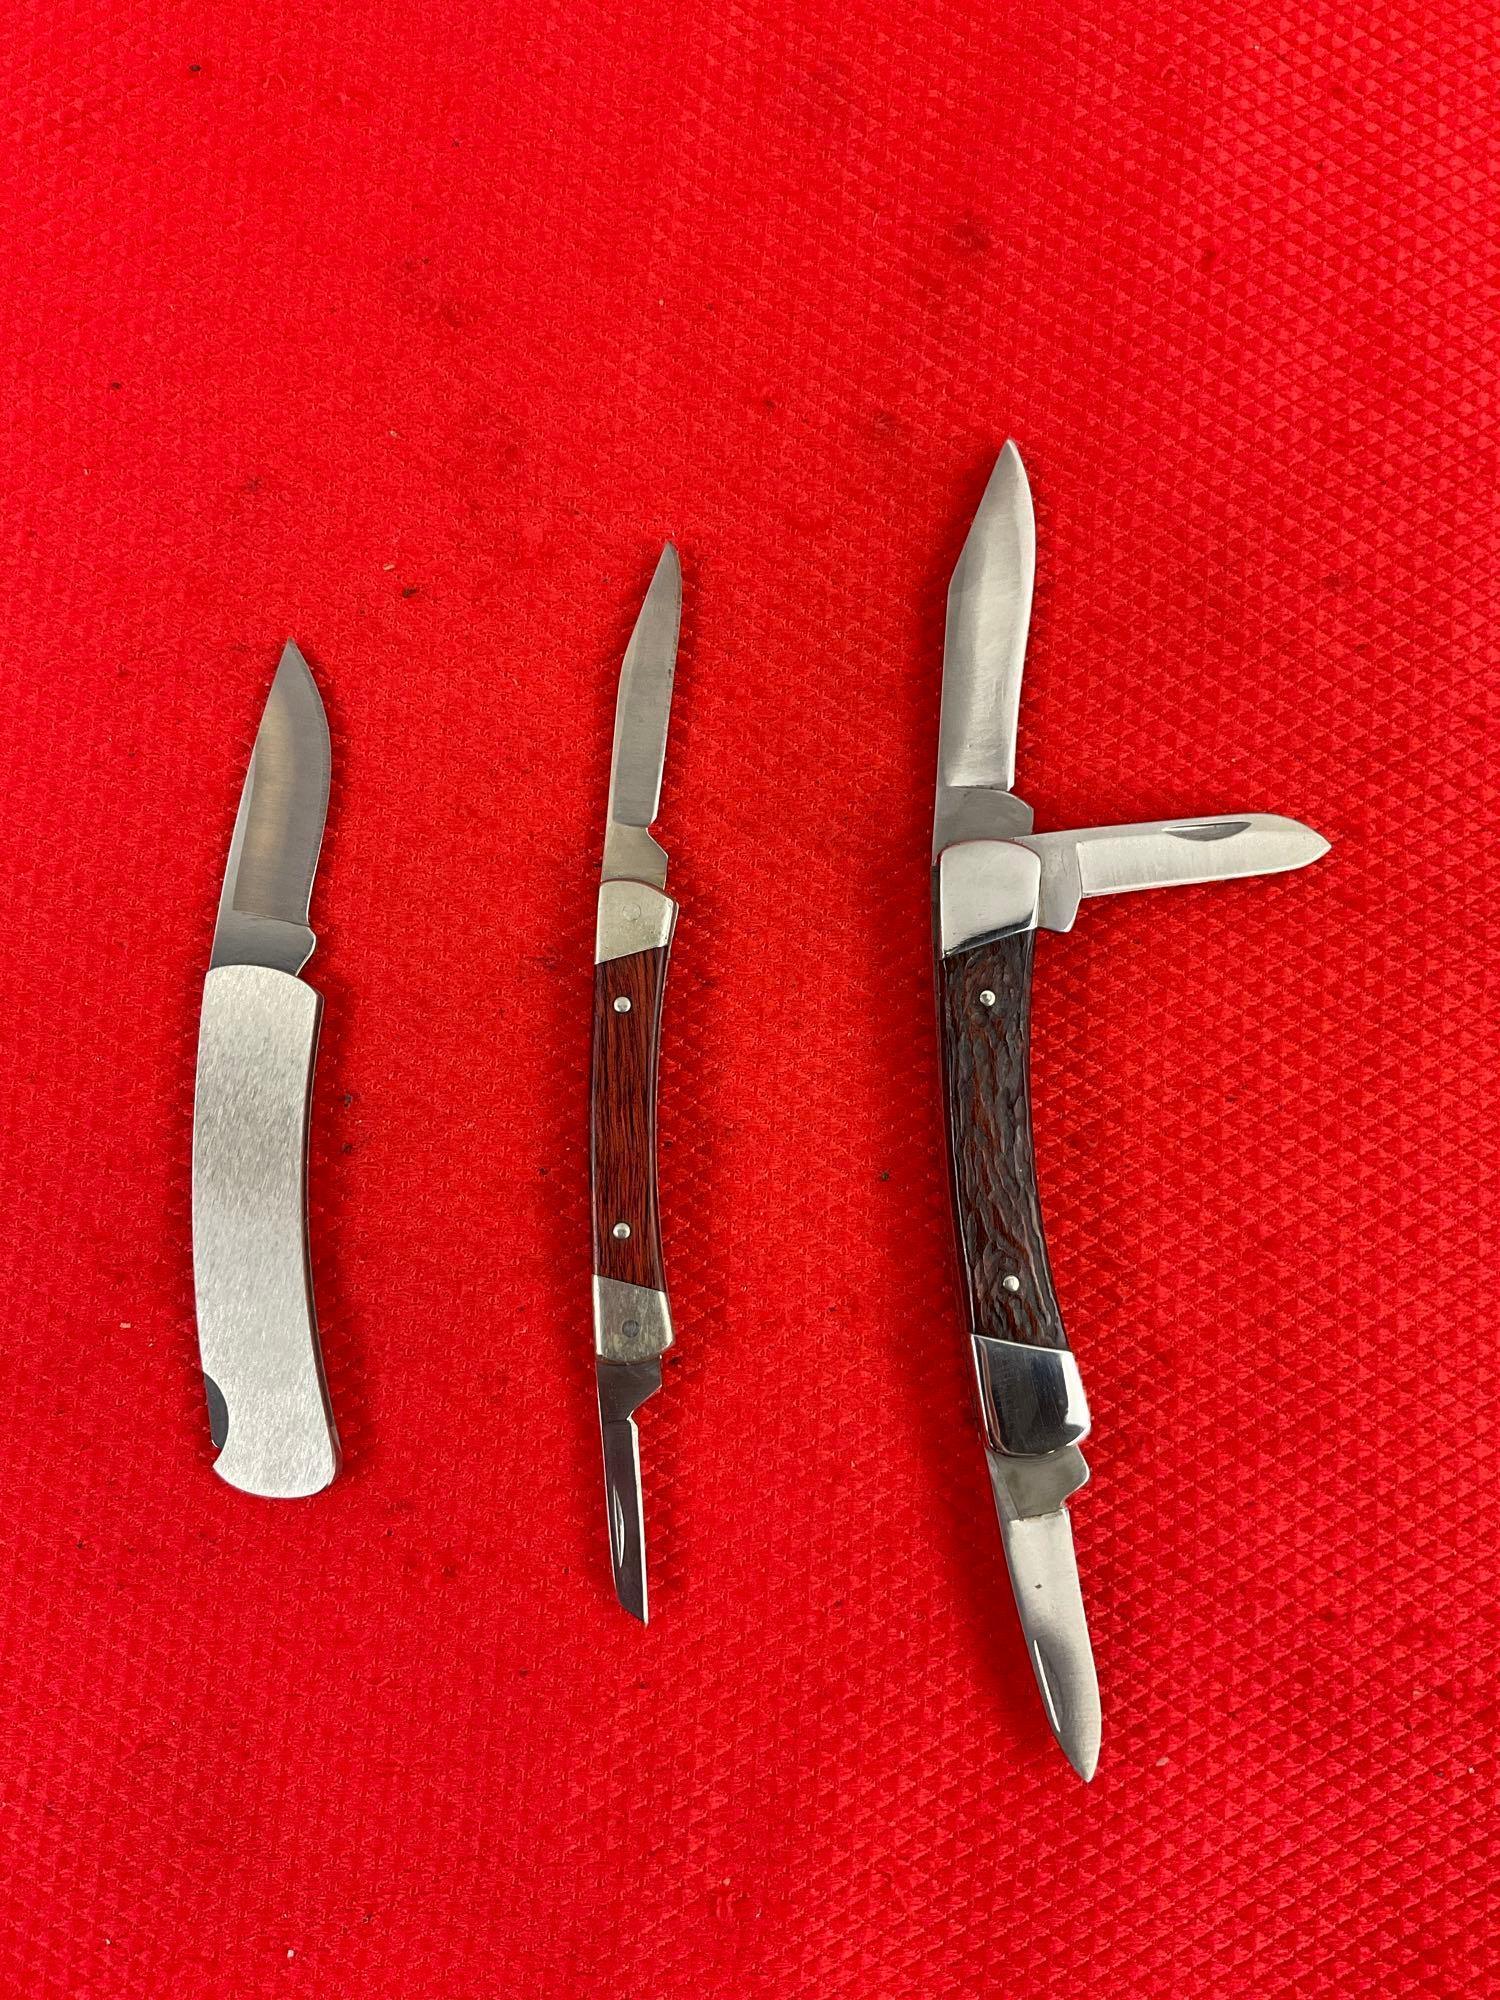 3 pcs Vintage Buck Steel Folding Blade Pocket Knives Models 703, 705 & B525 100 Year Edition. See